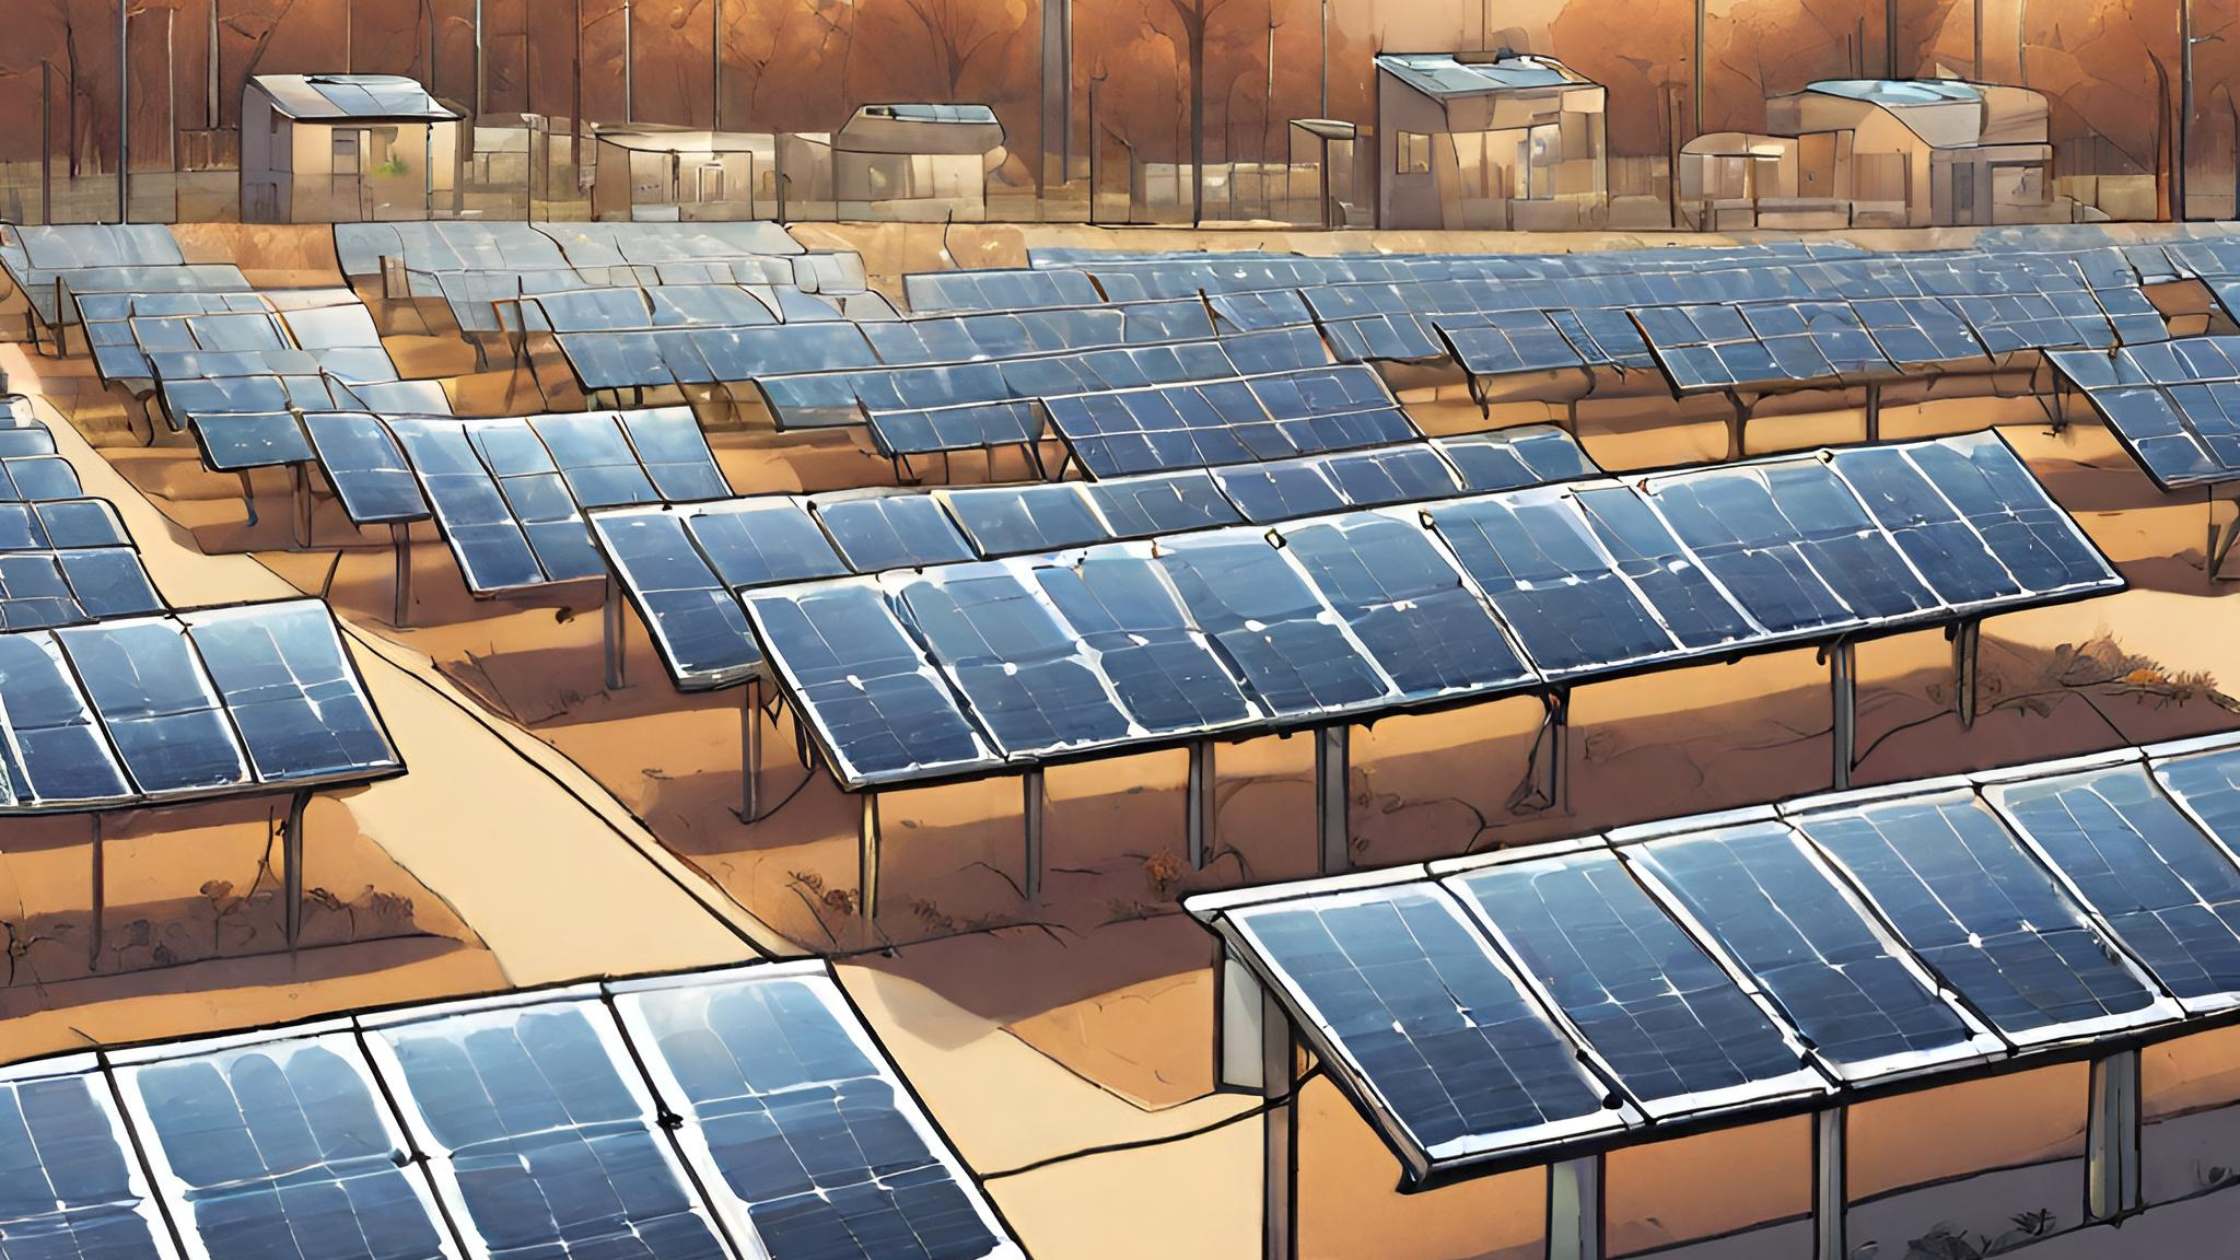 Columbus Republic: “Grant will energize an array of solar in Columbus”